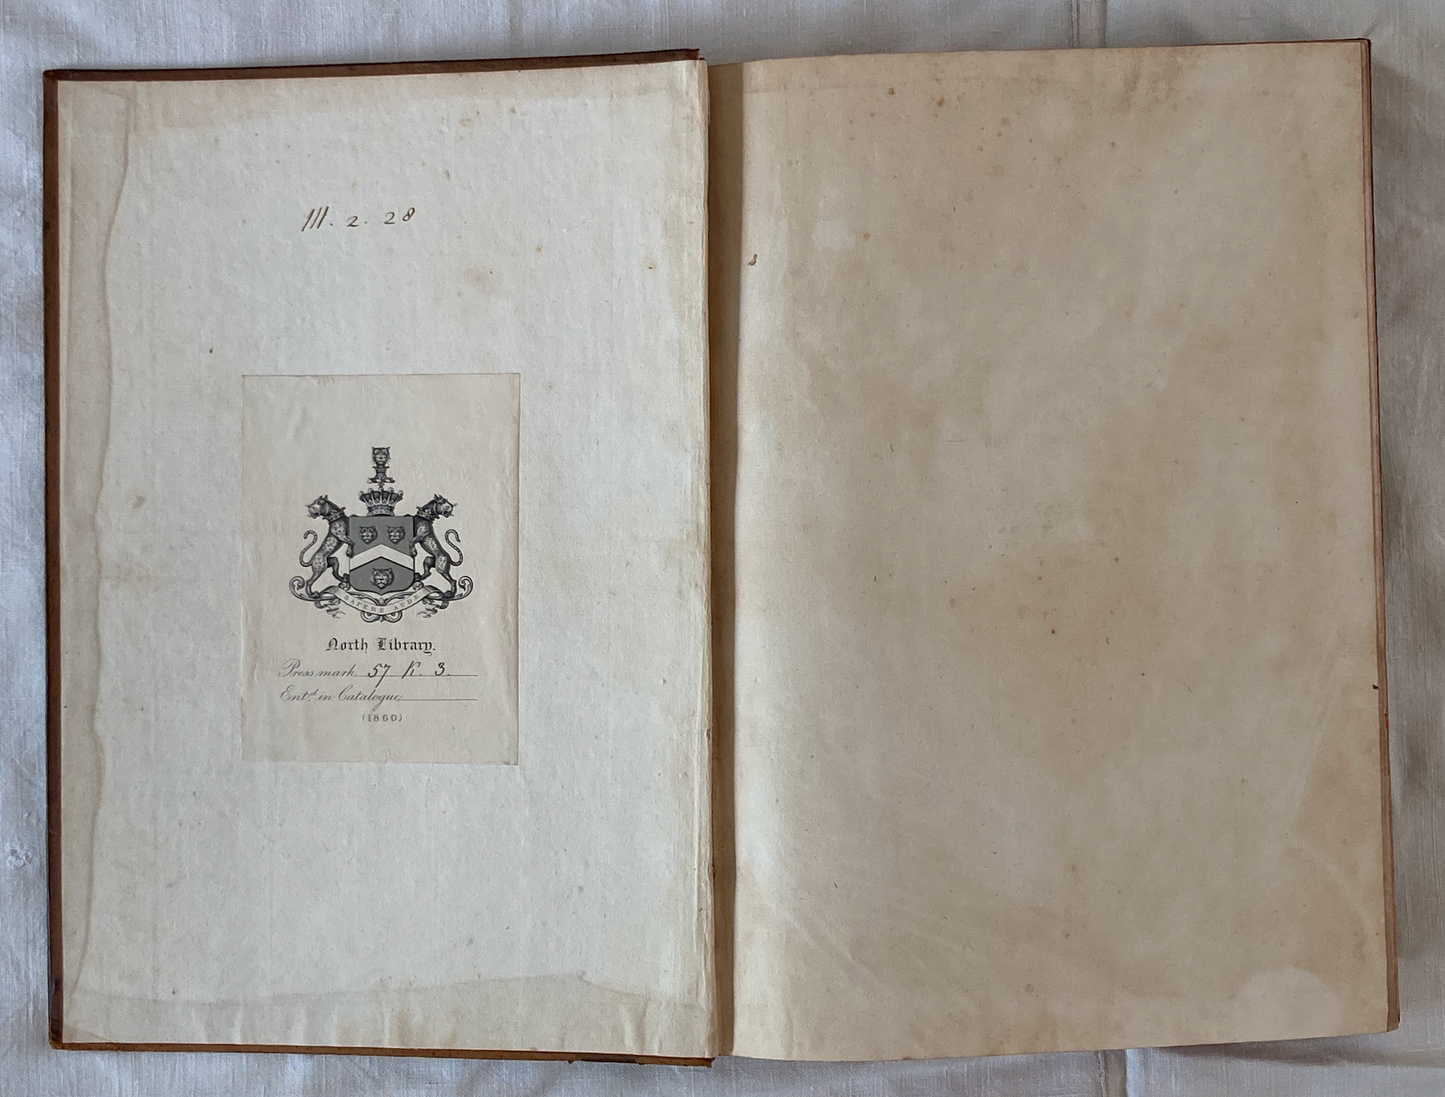 Macclesfield copy of parts Parts 3-6 of De Bry Grand Voyages